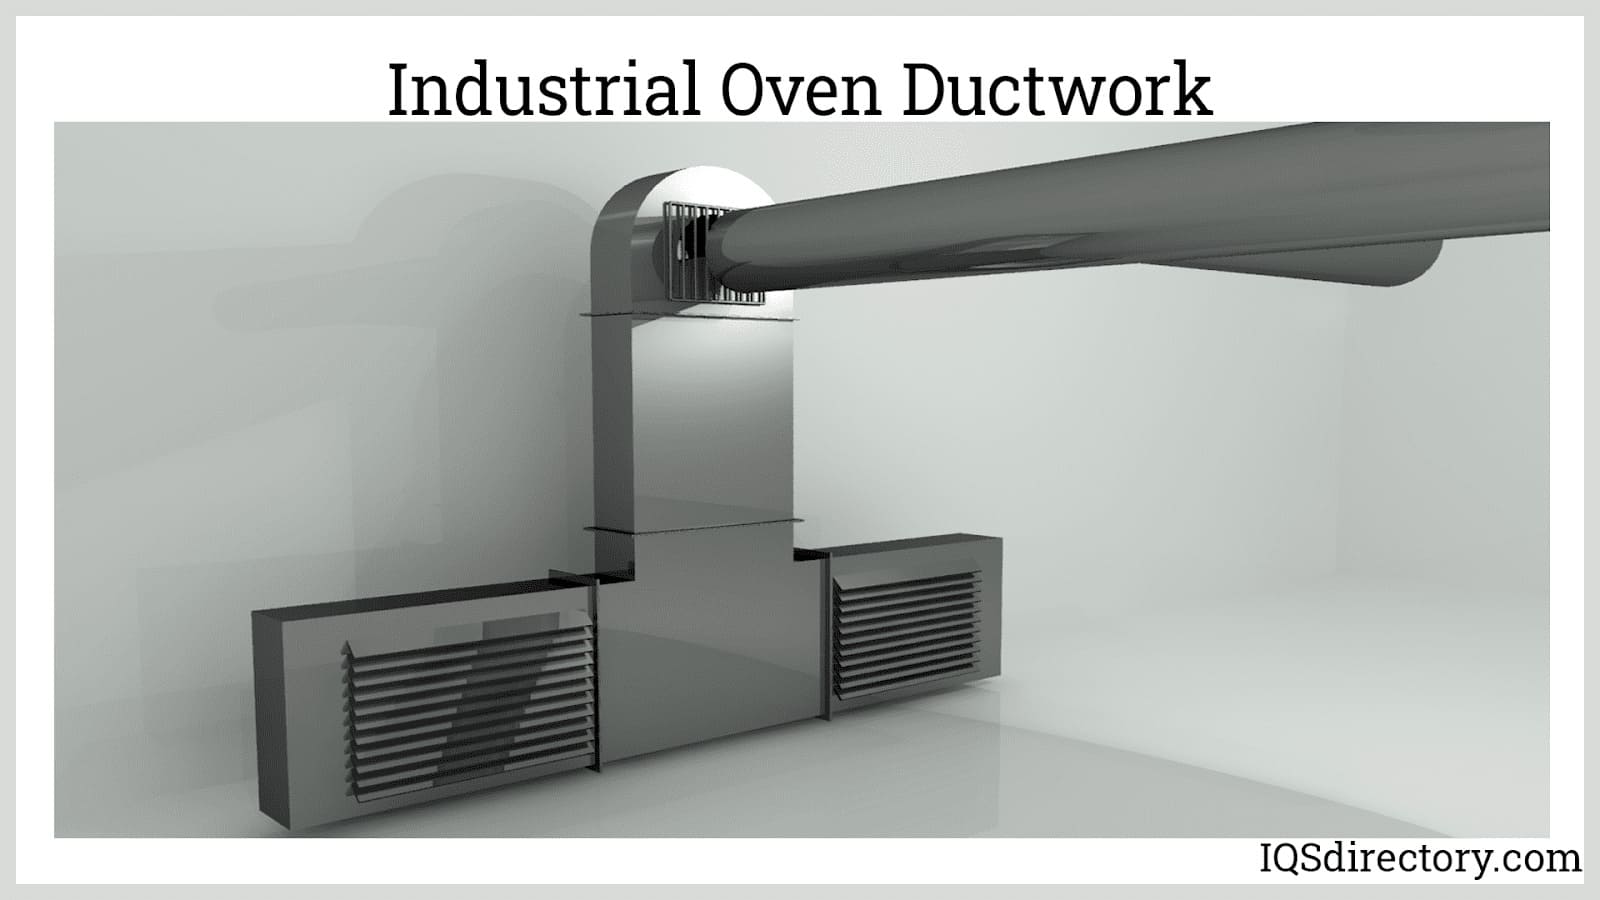 Industrial Oven Ductwork